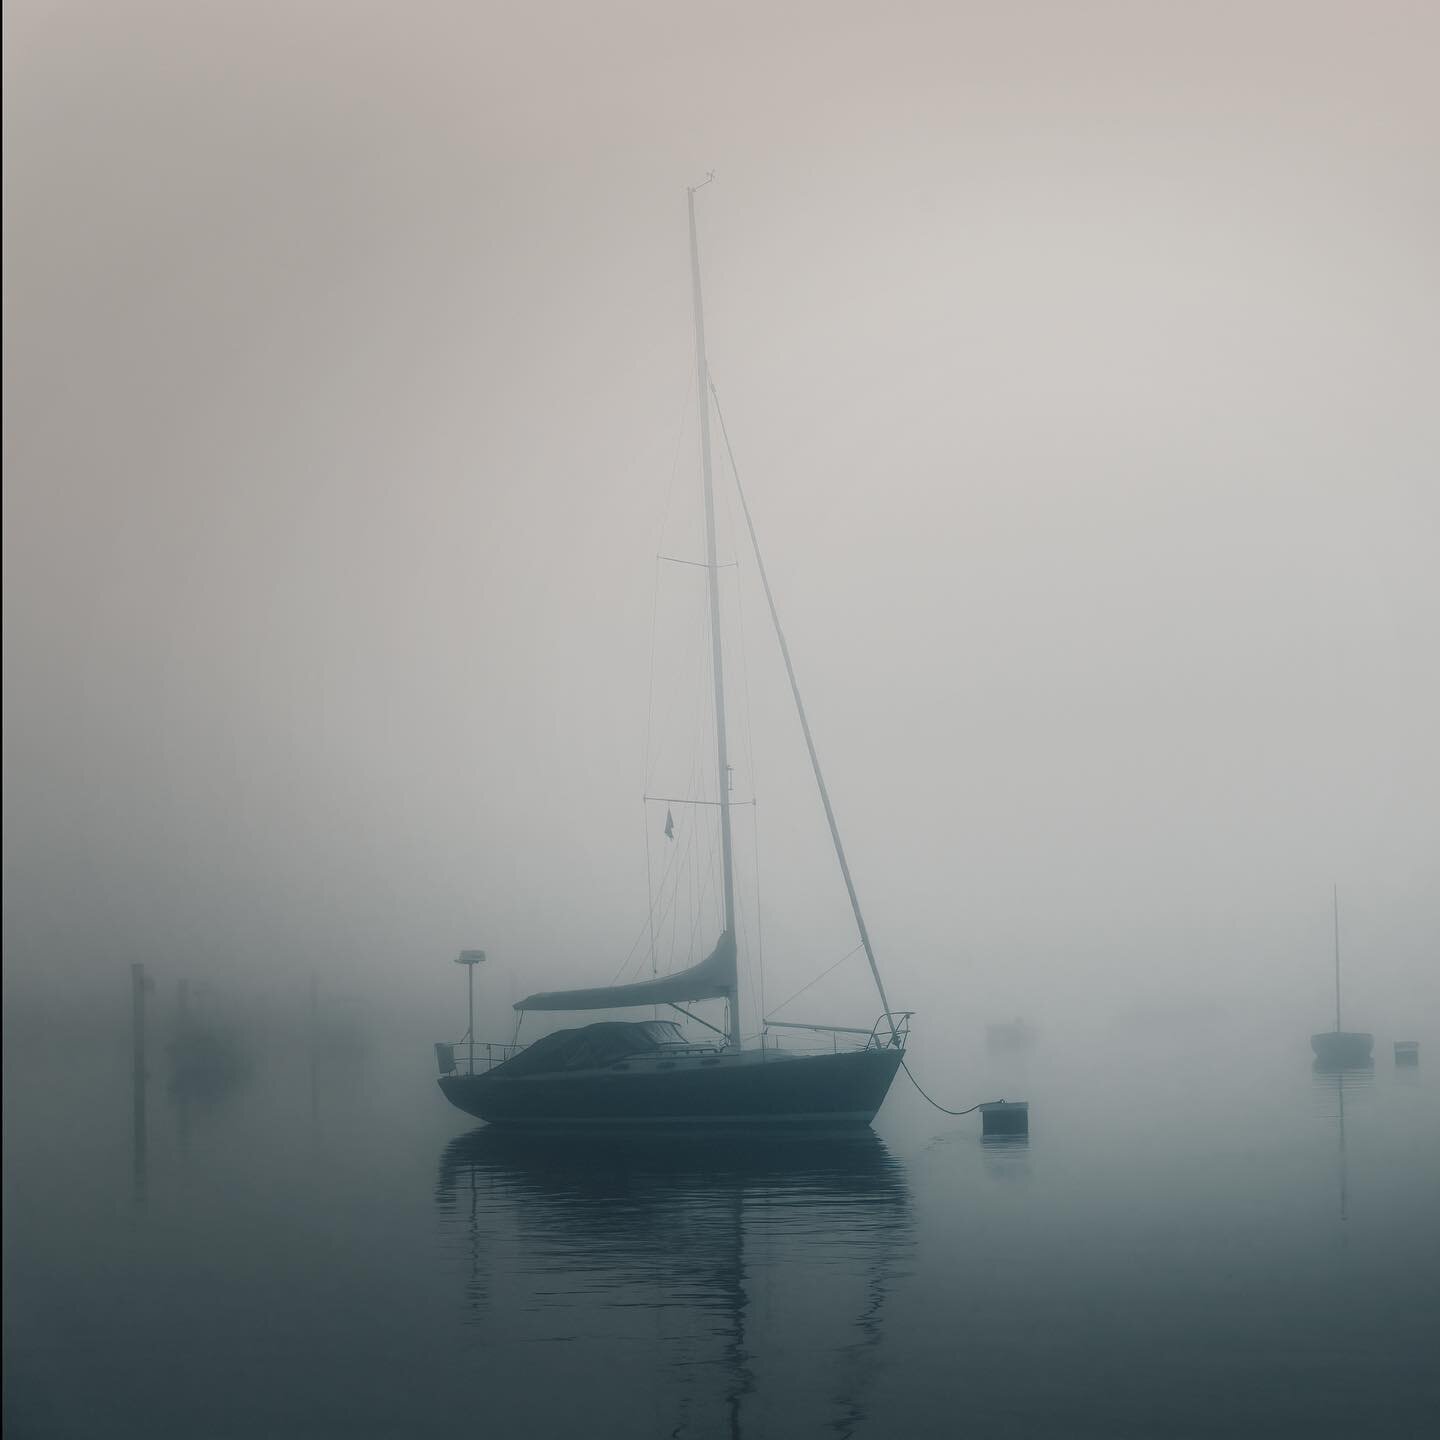 Fisherman&rsquo;s morning fog at Martha&rsquo;s Vinyard&hellip; #fog #marthasvineyard #fisherman #boat #photography #art #mylens #landscapephotography